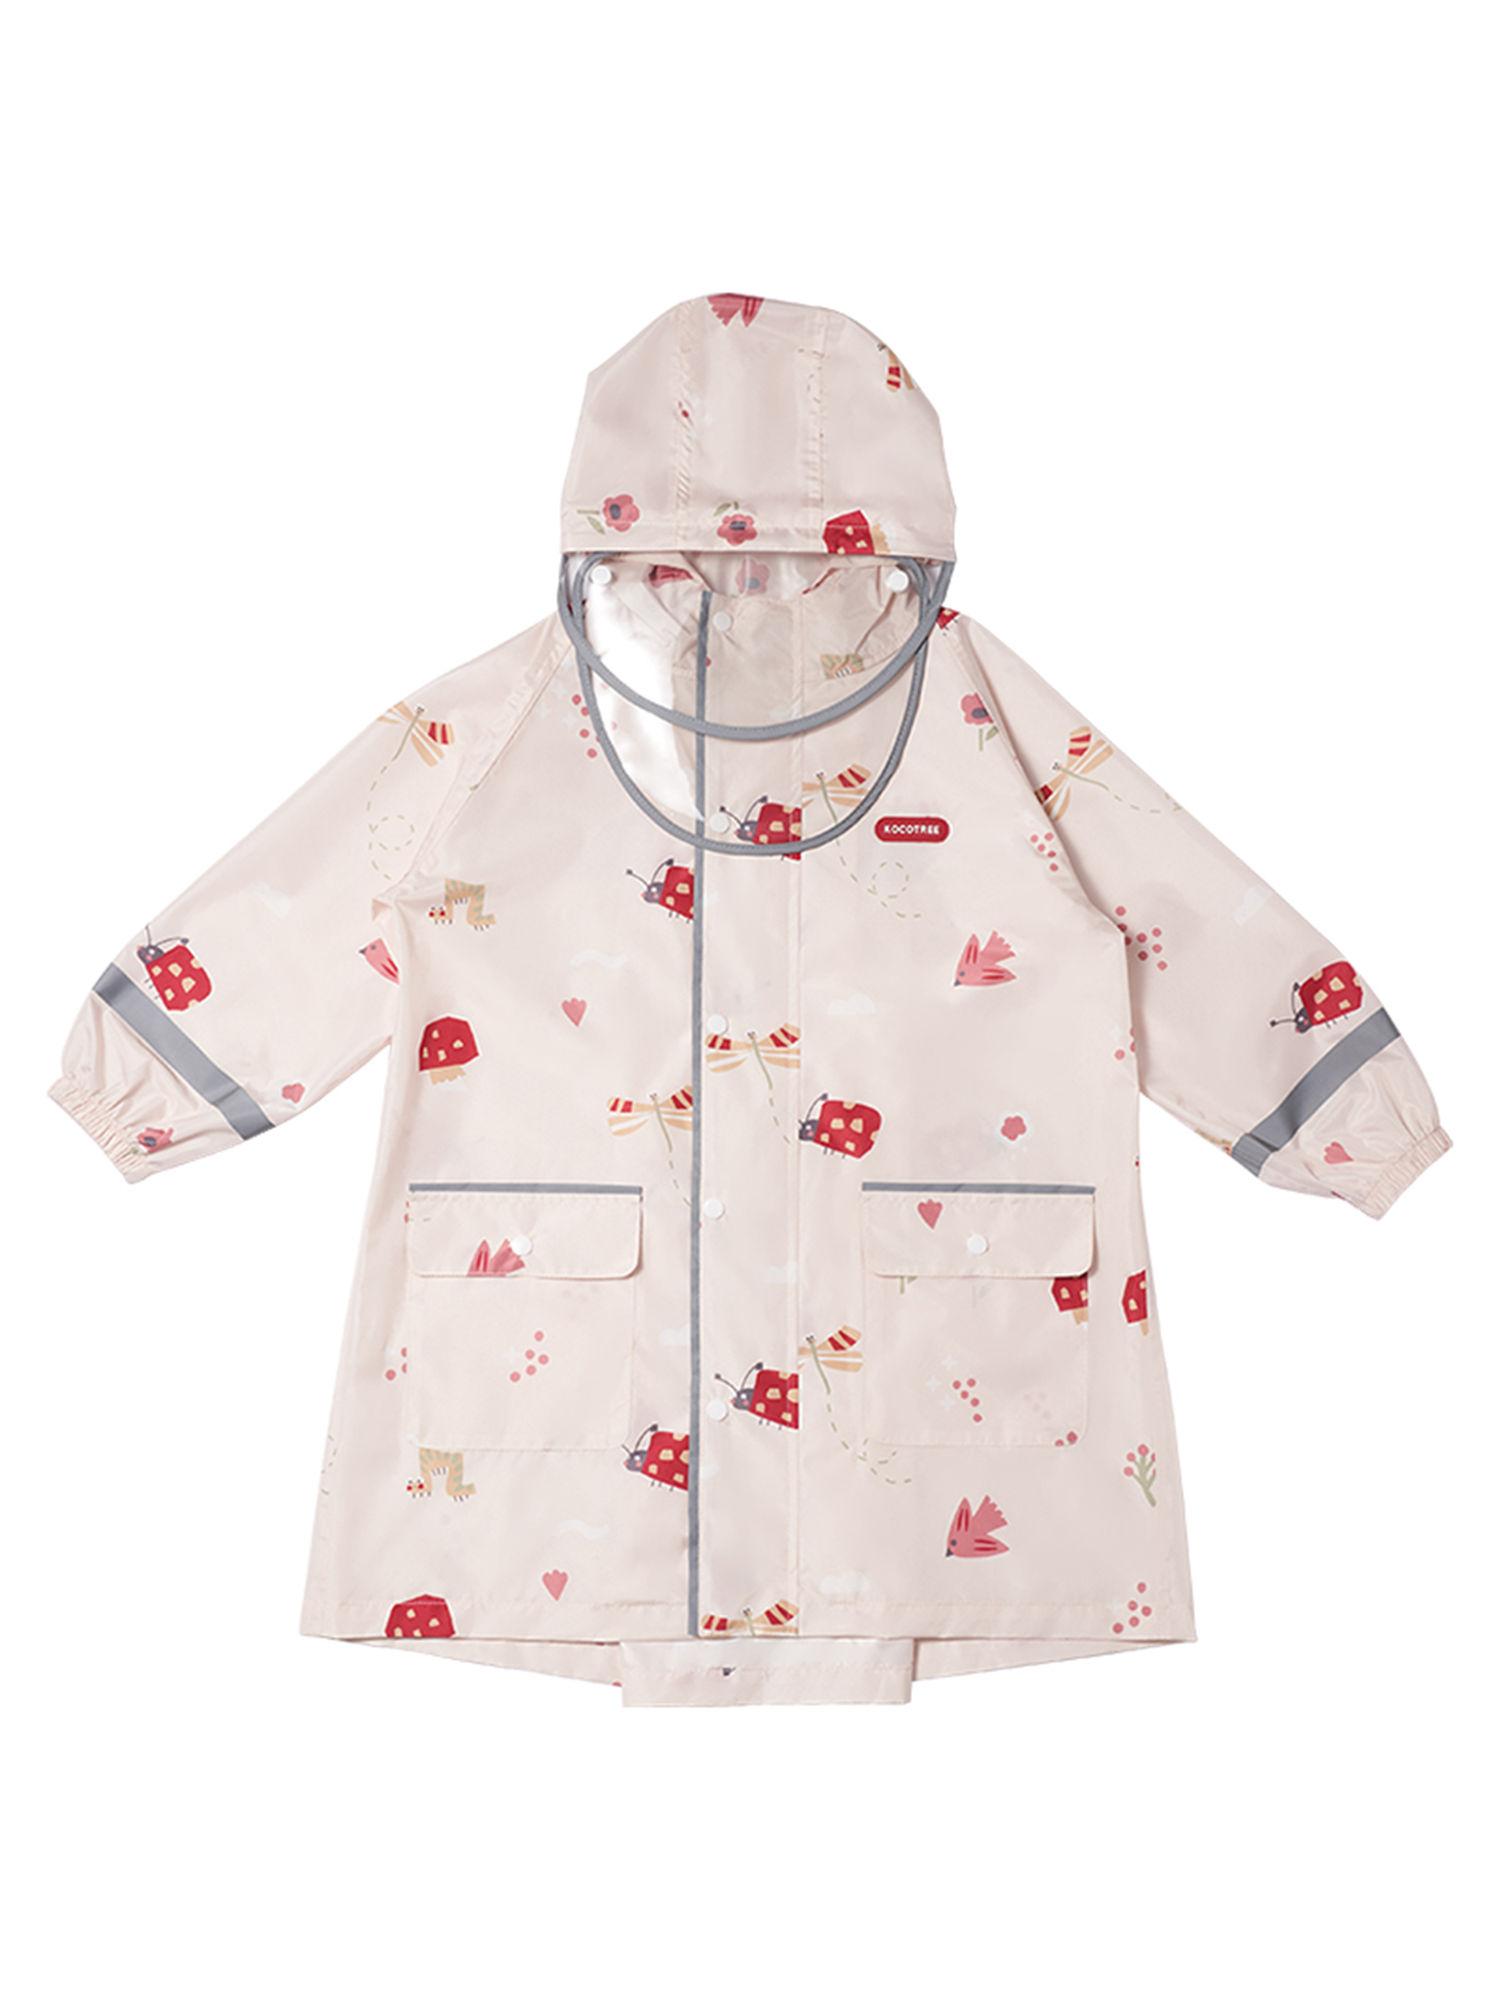 cream-woodland-butterfly-theme-kids-raincoat-jacket-style